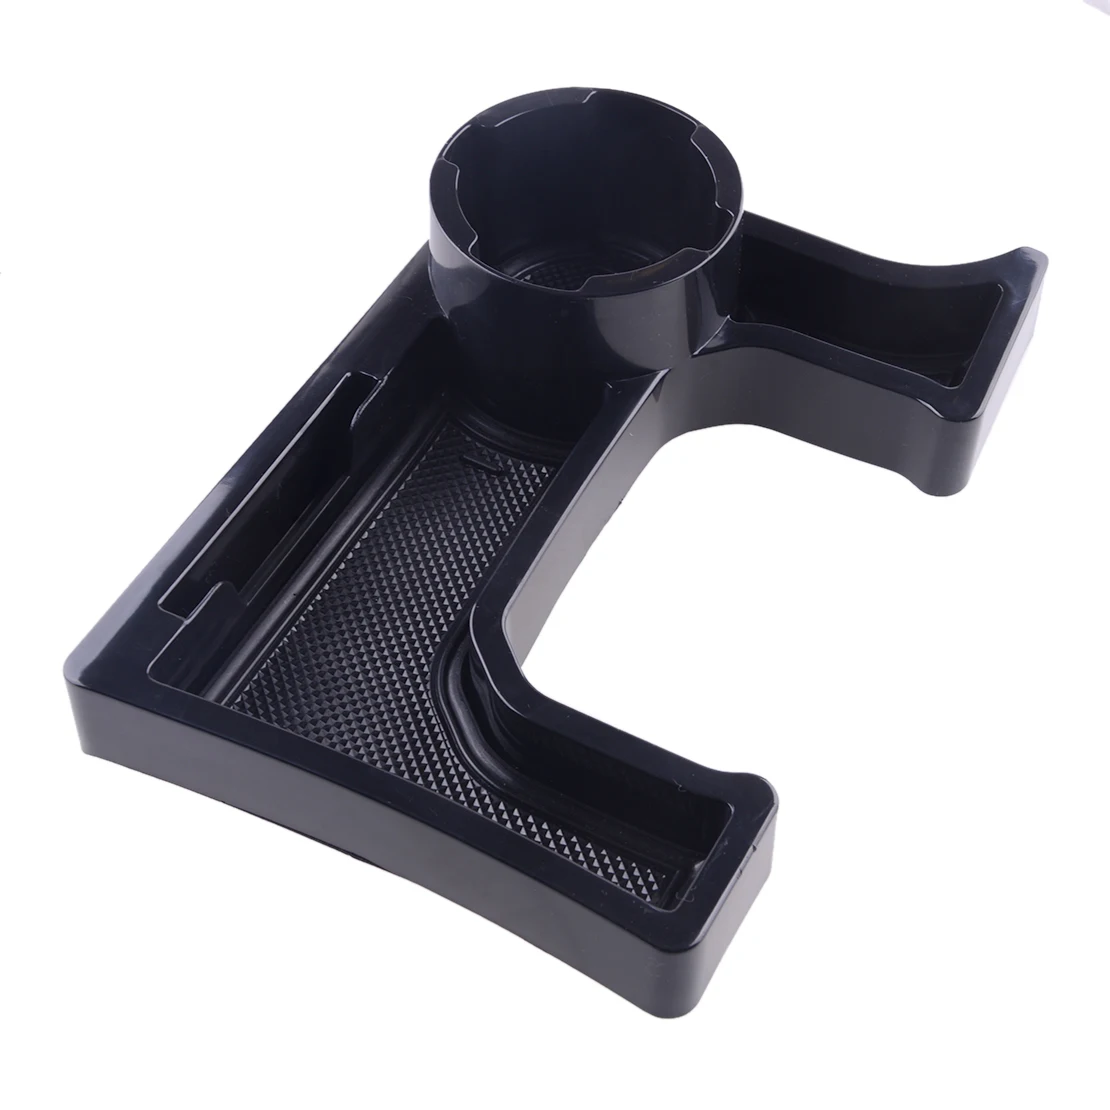 

Car Center Console Gear Shift Cup Holder Storage Box Tray Fit For Suzuki Jimny MT Model 2019 2020 2021 Plastic Black